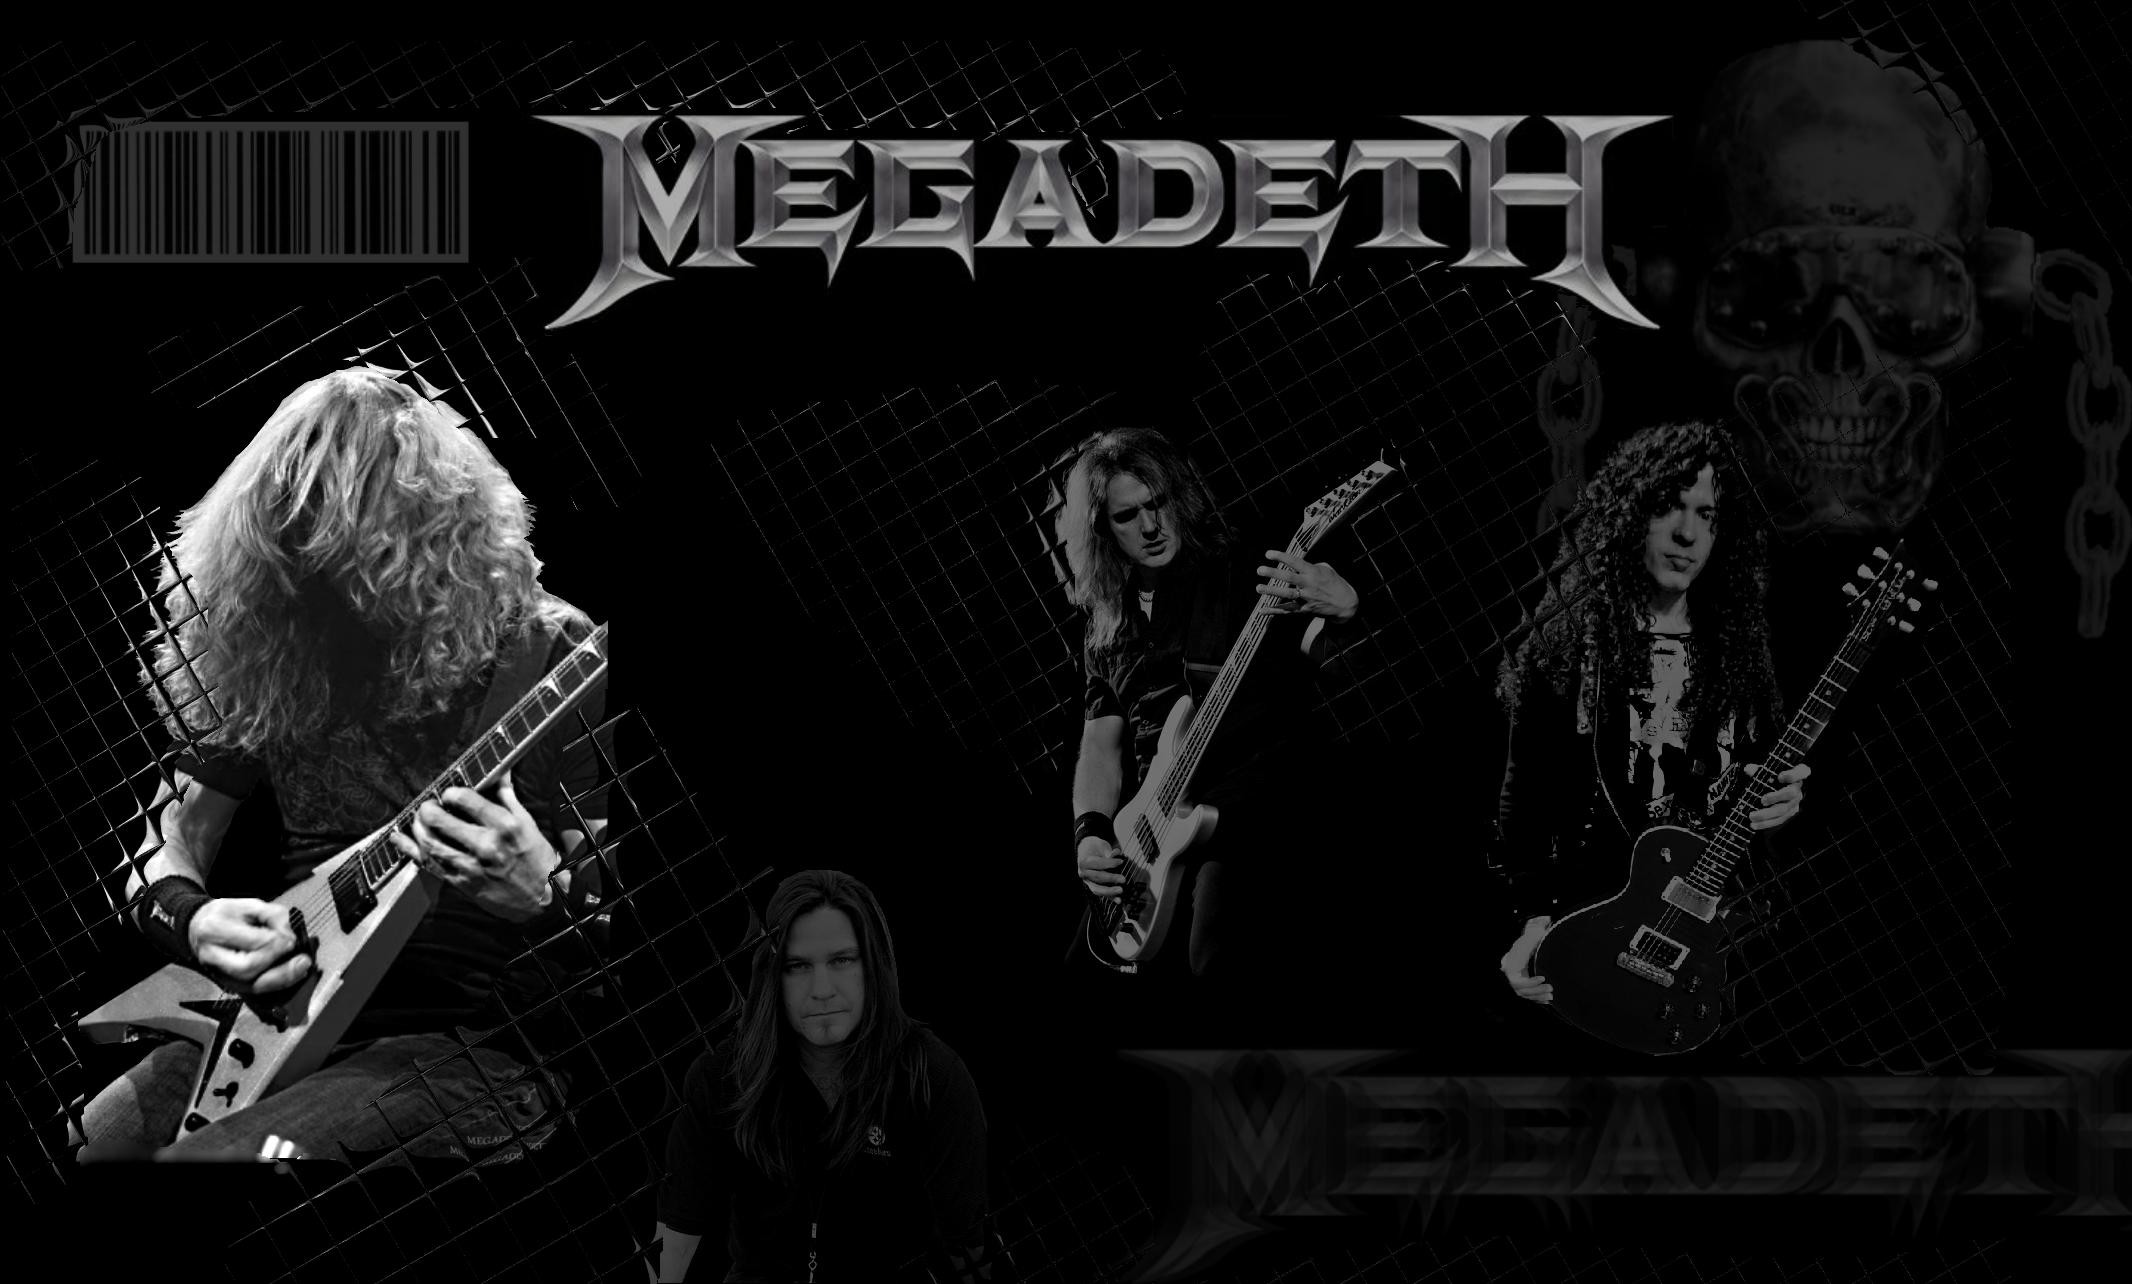 2132x1284 Megadeth Wallpaper - Megadeth Photo (23008076) - Fanpop